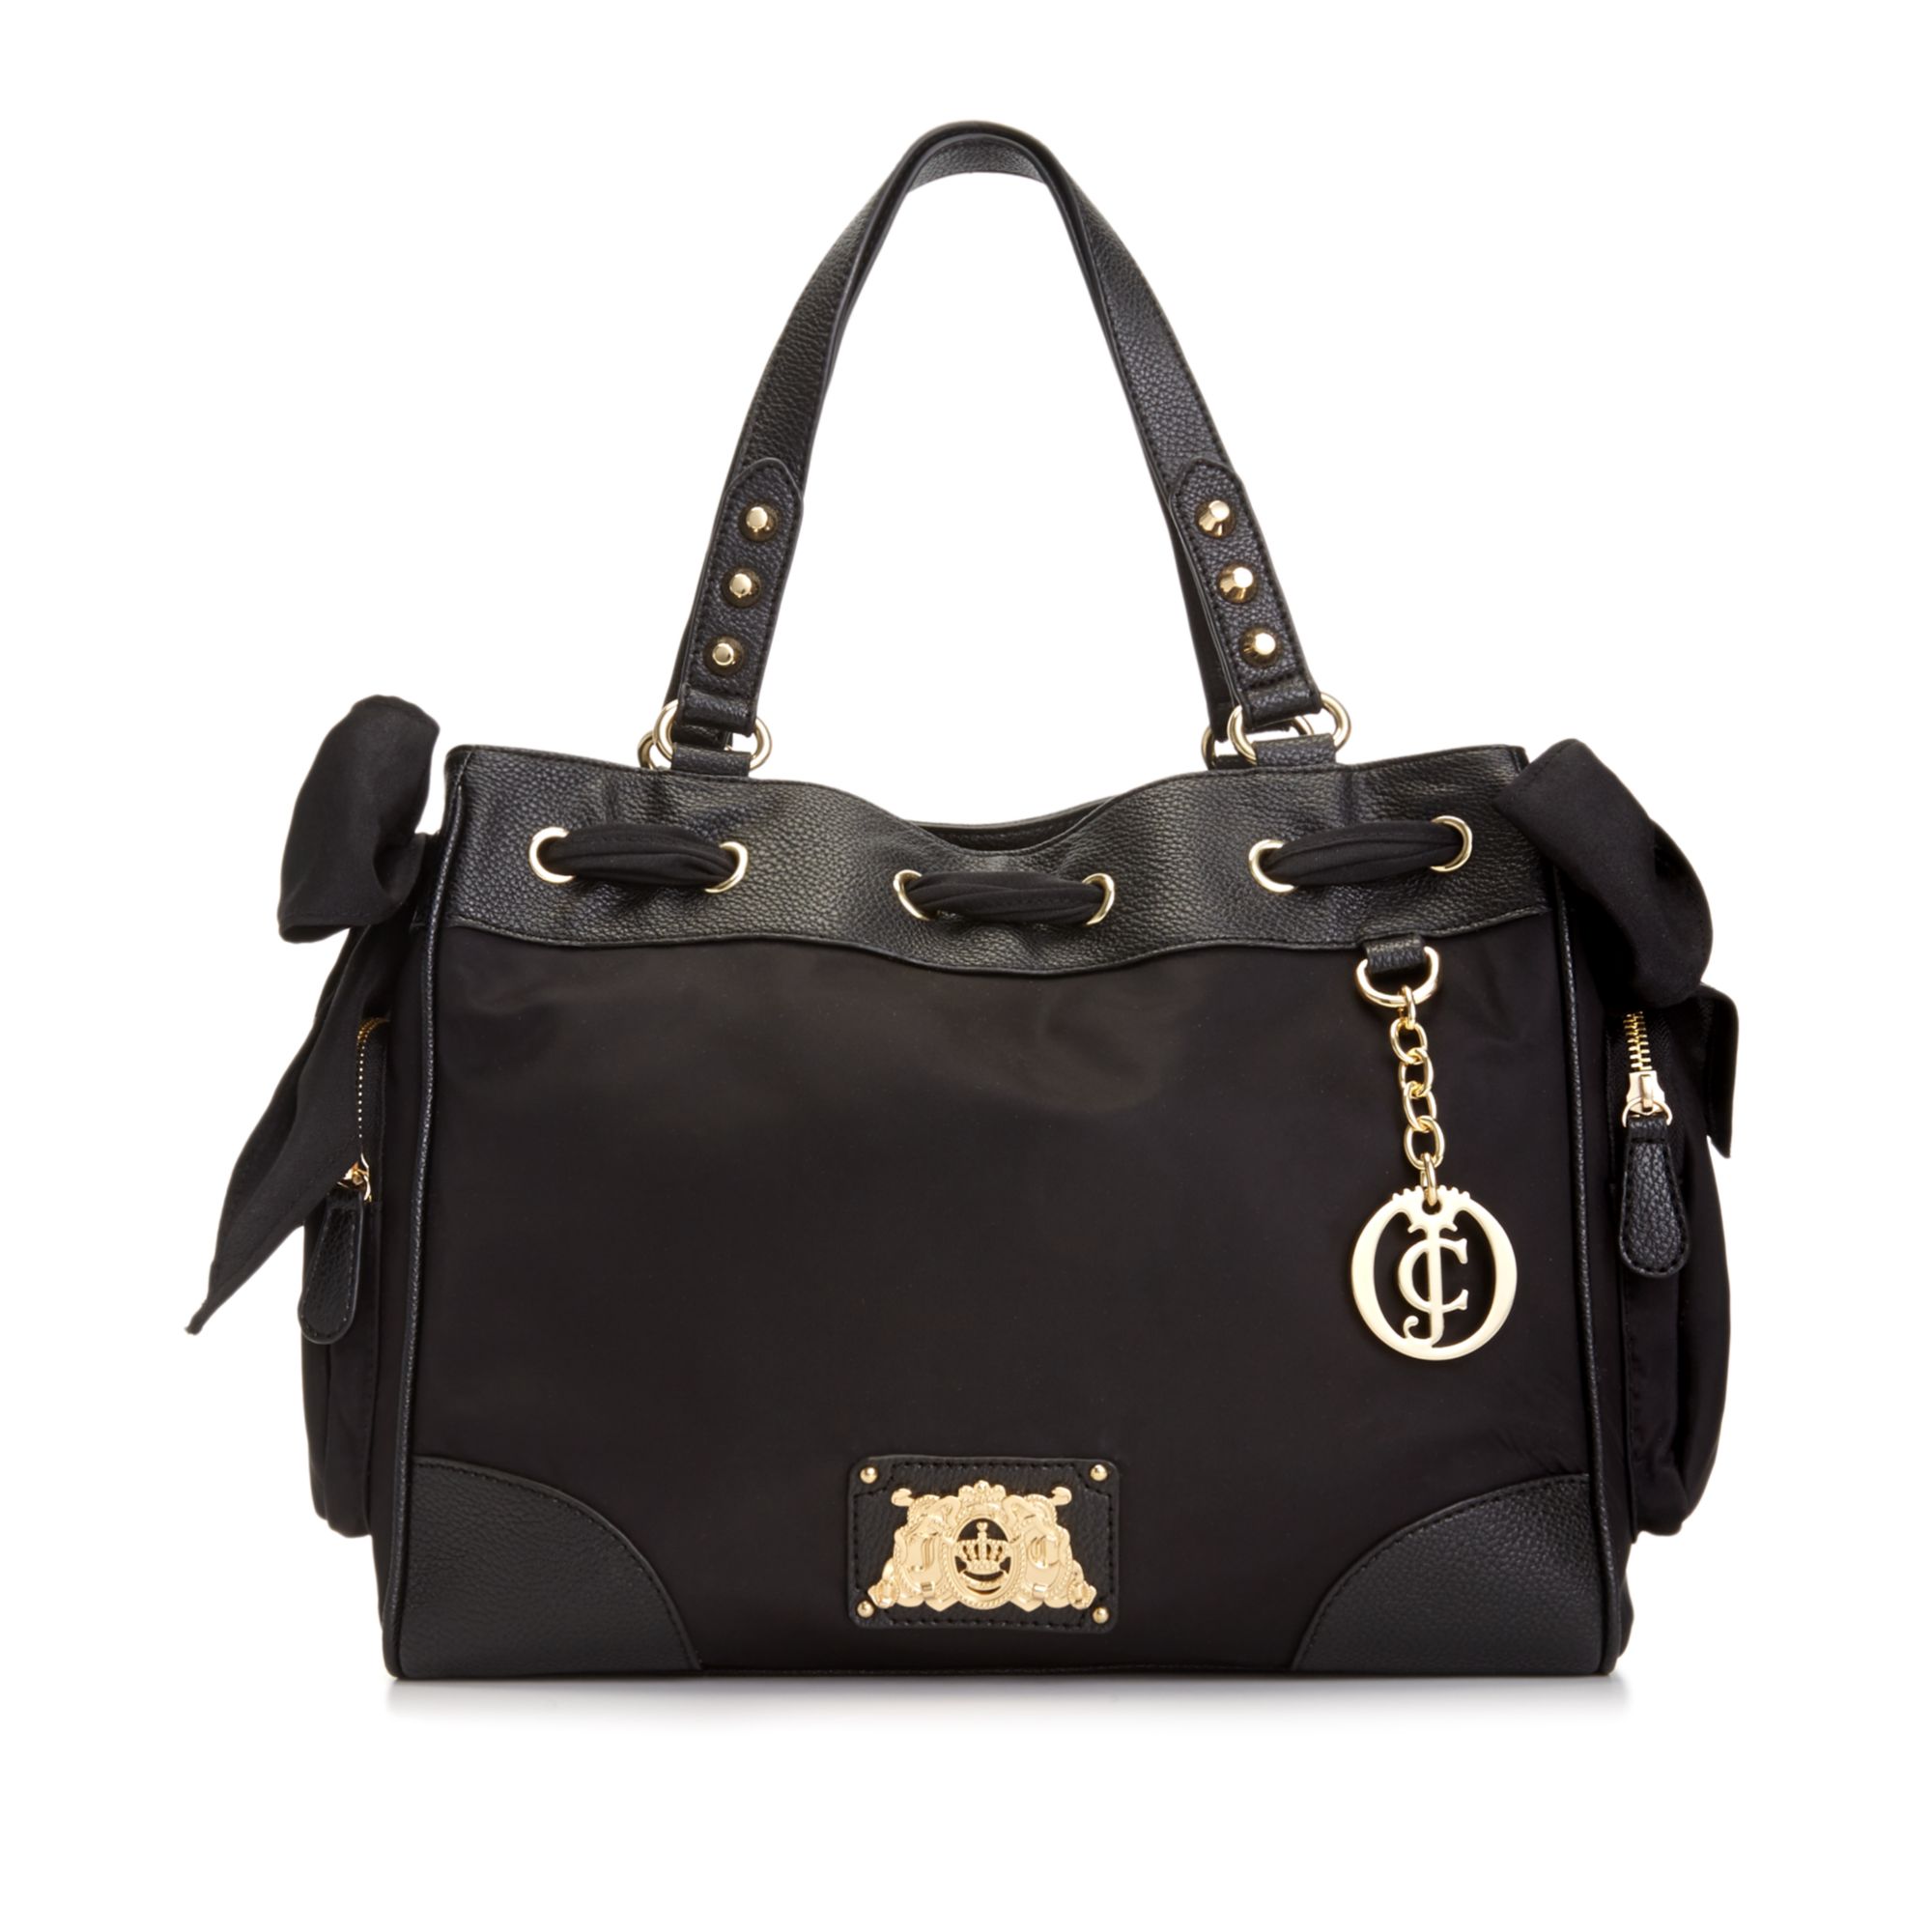 Juicy Couture Purses Handbags | semashow.com